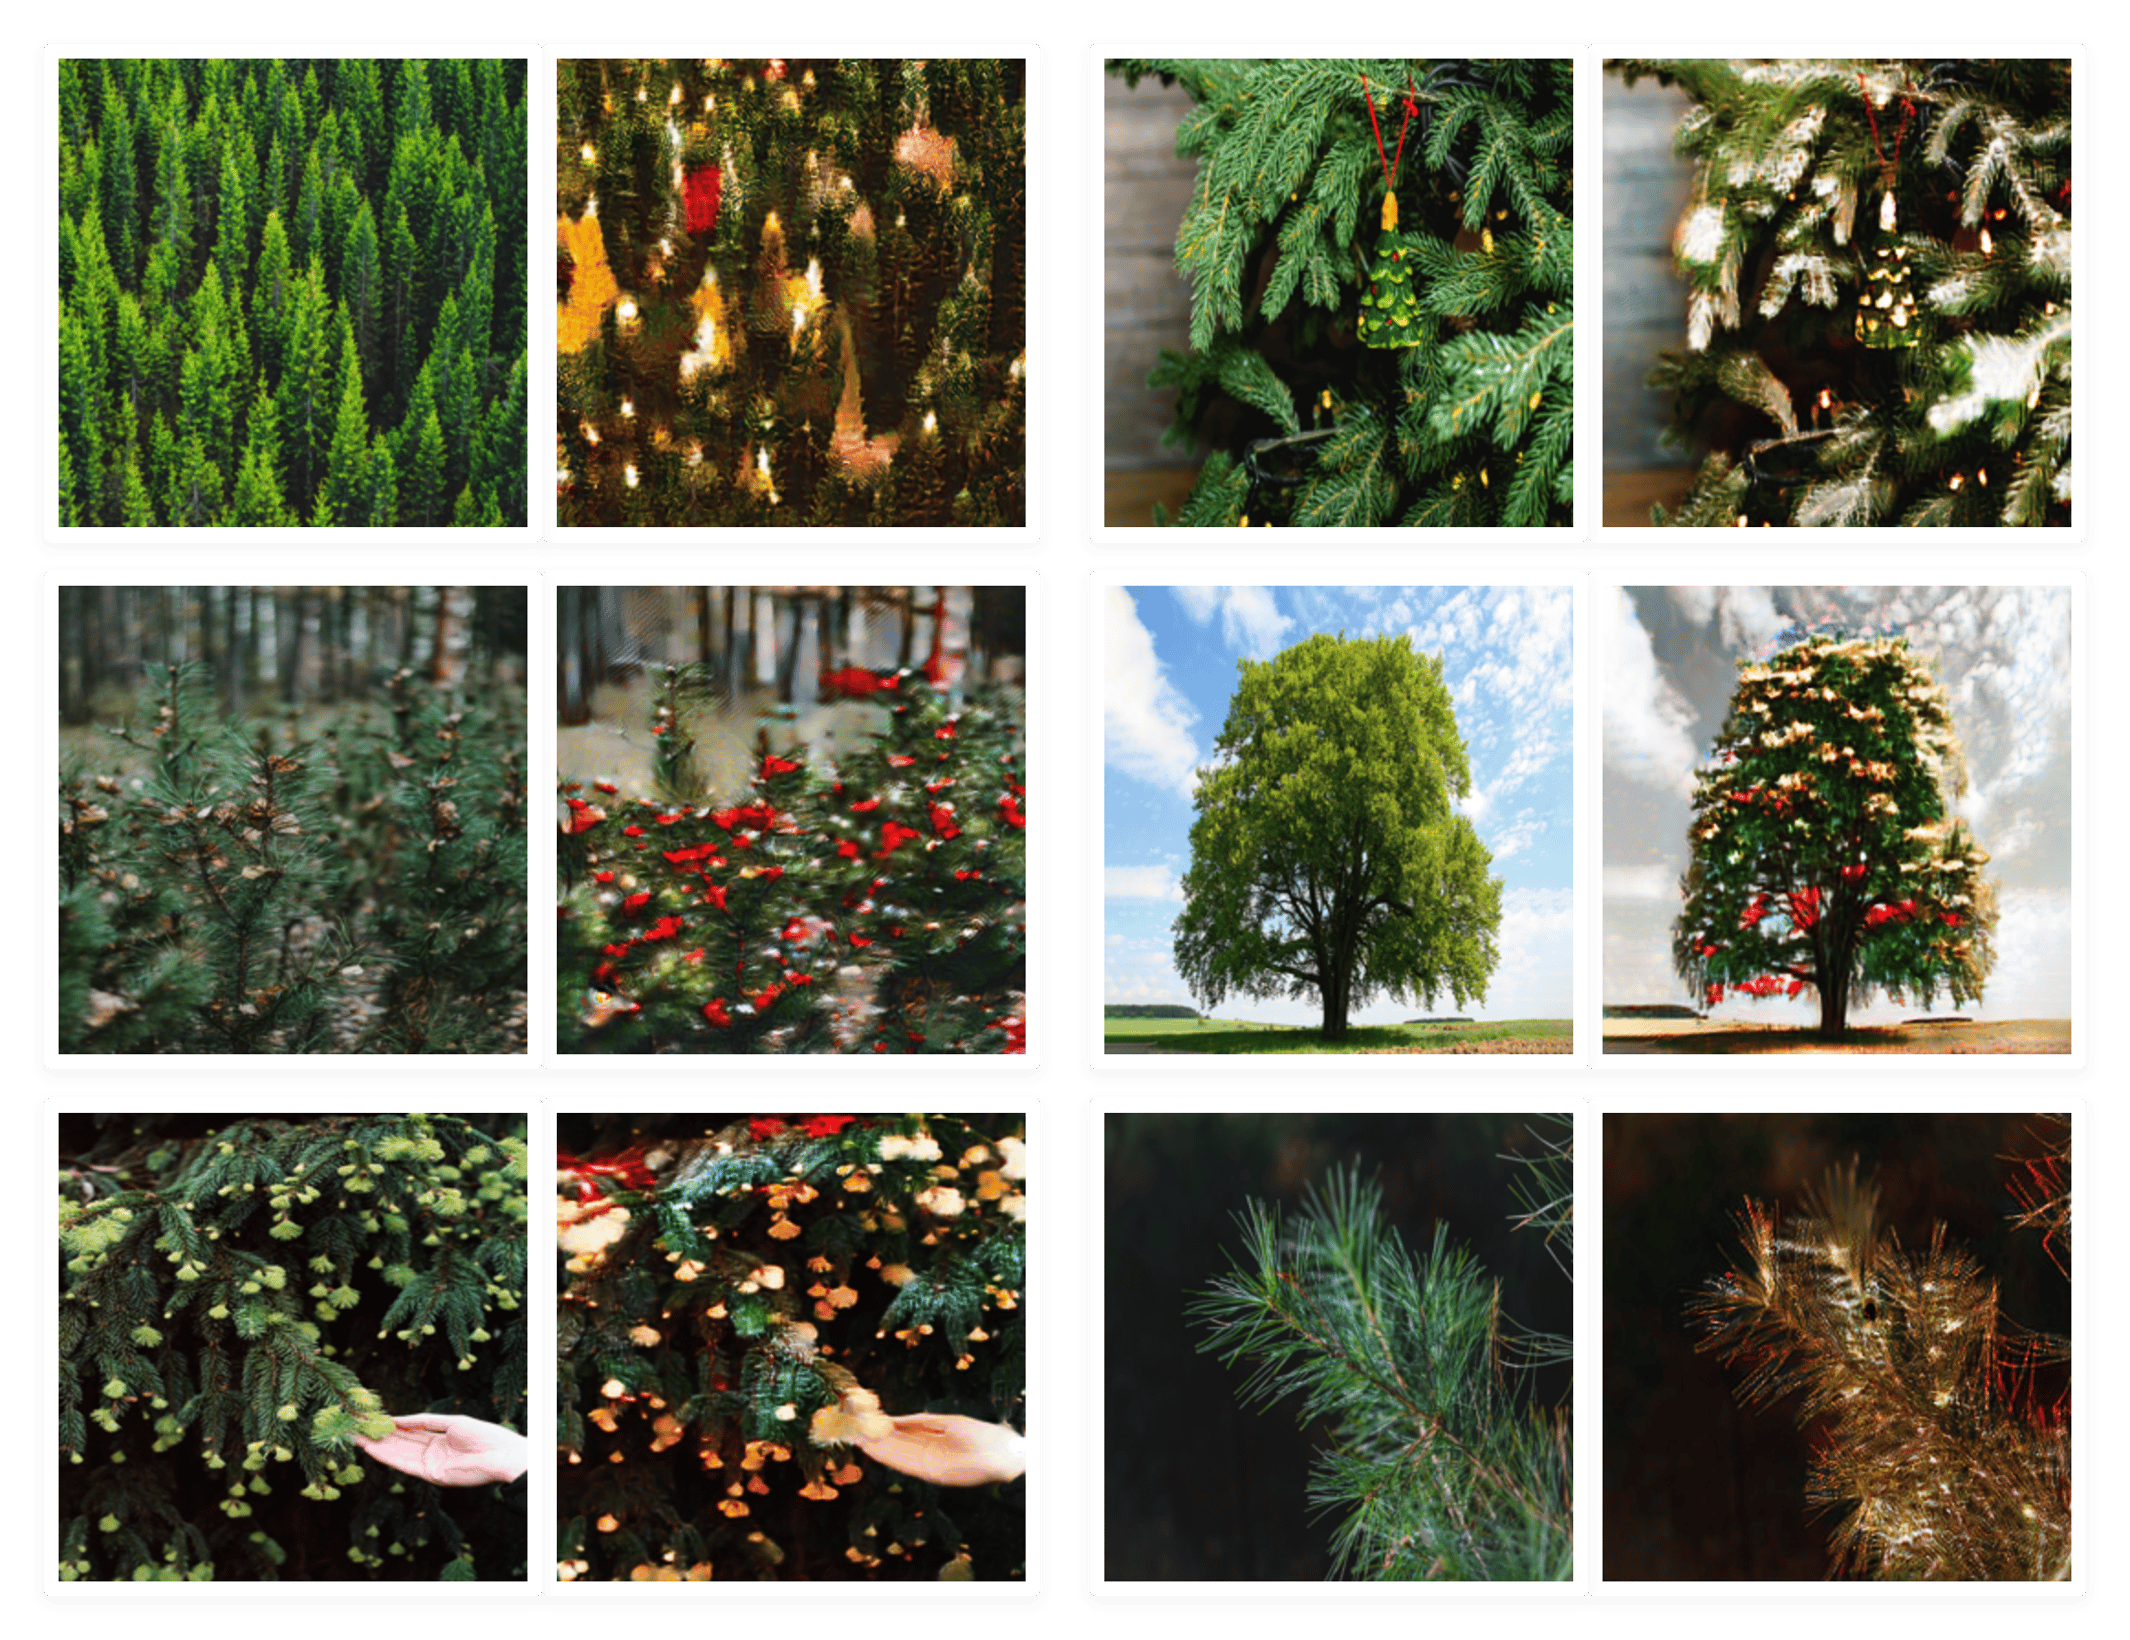 Trees-to-Christmas-trees-GAN